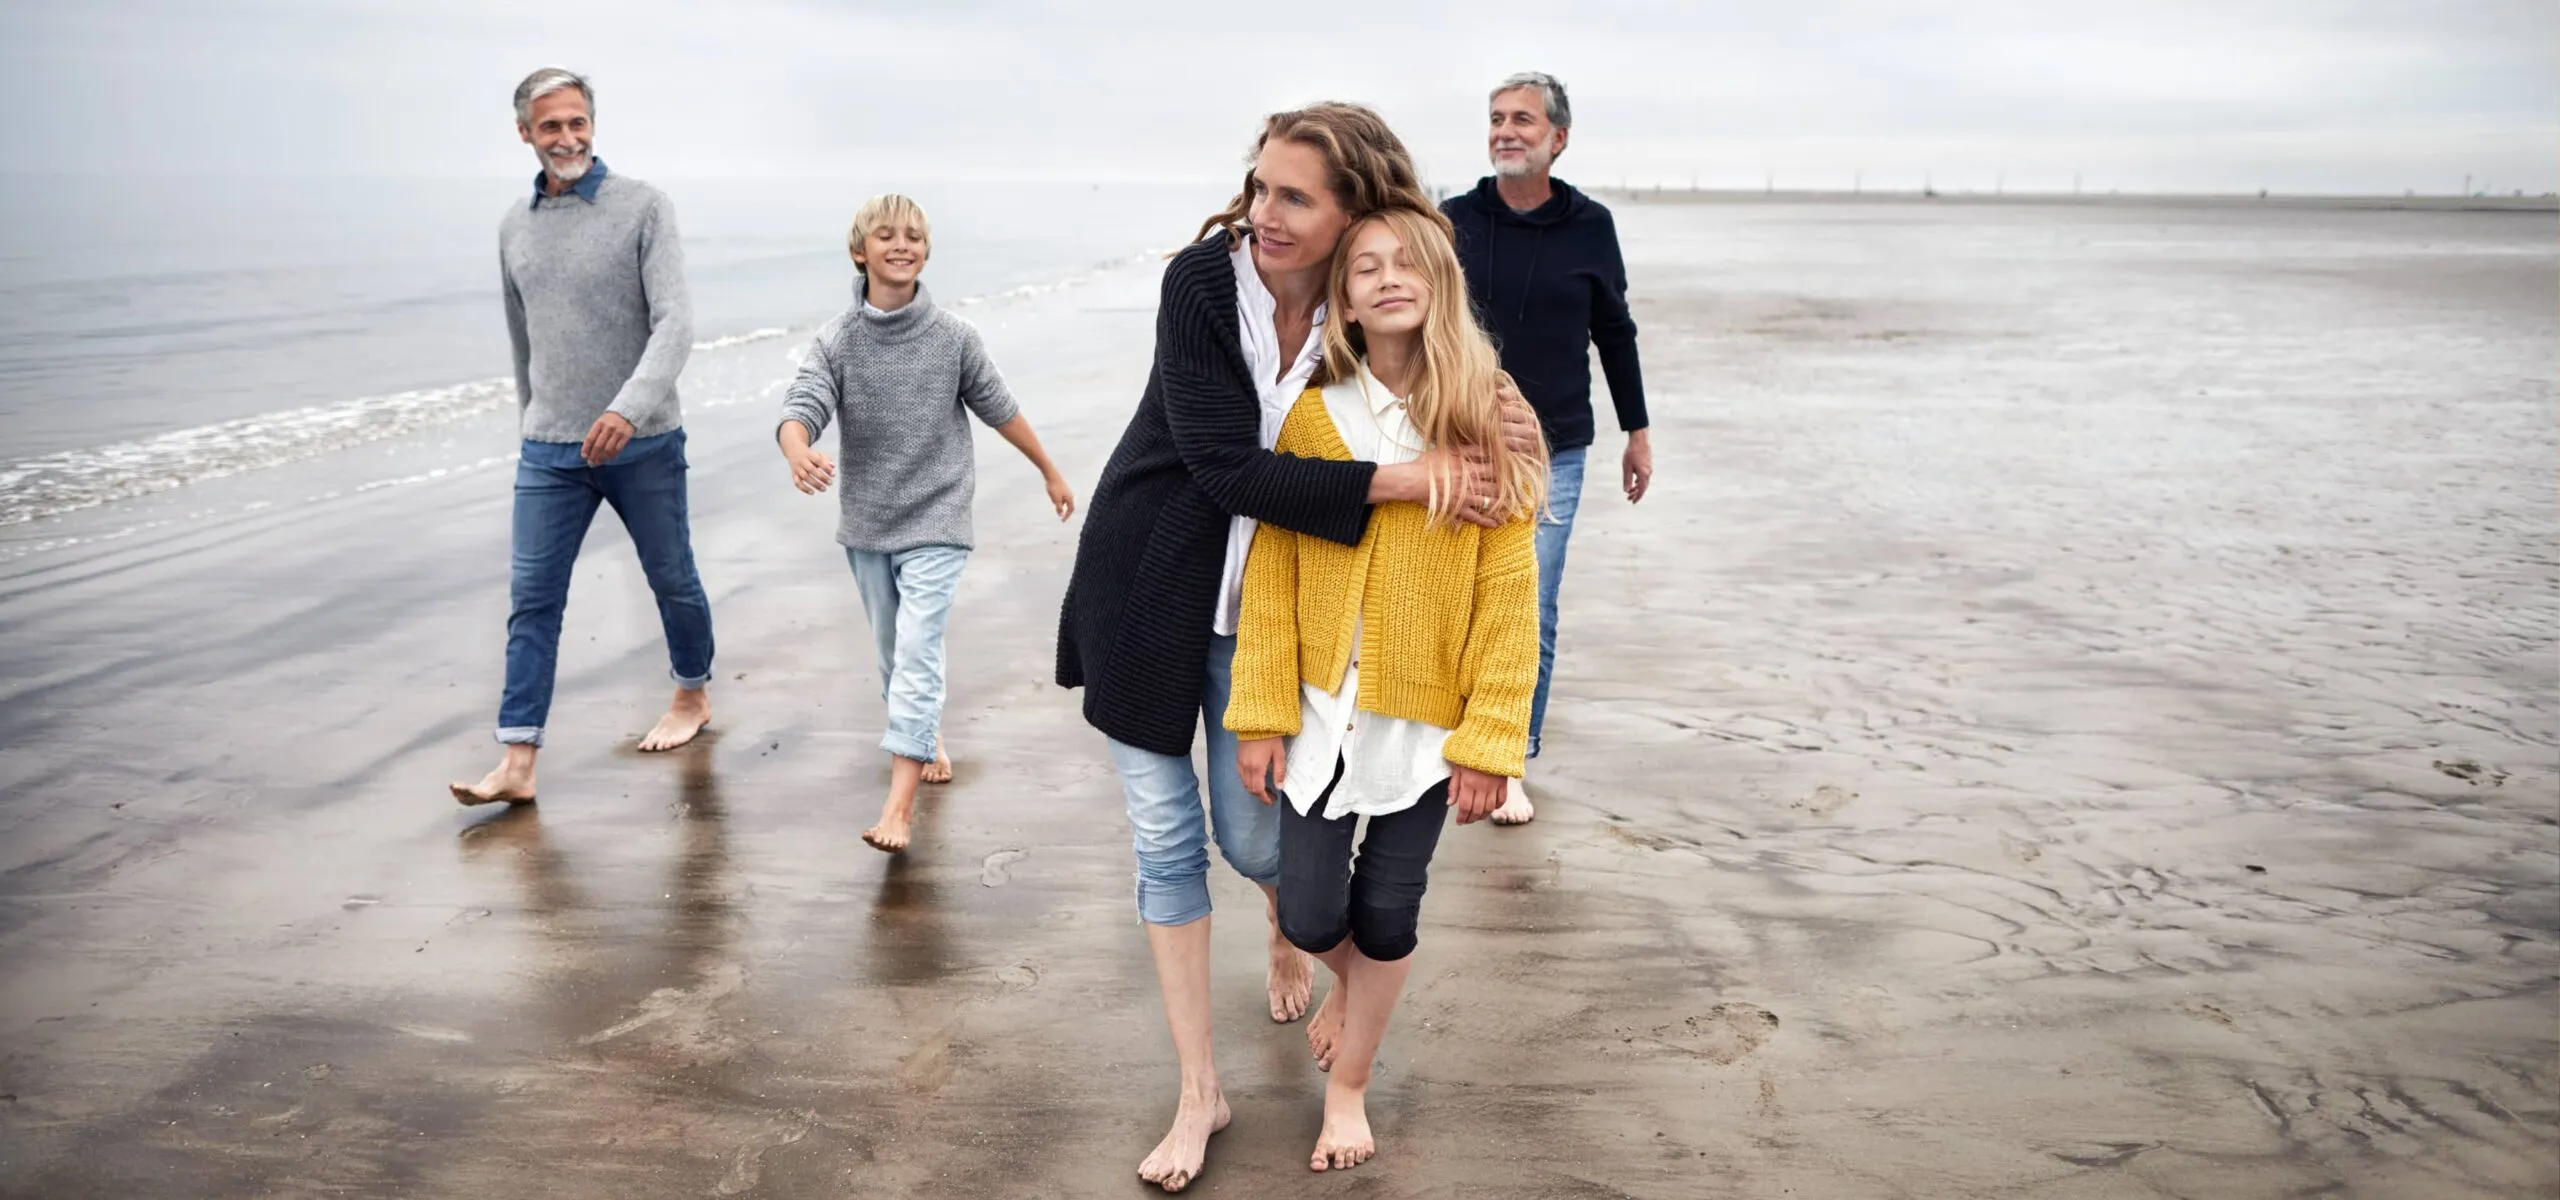 Family enjoying a walk on the beach